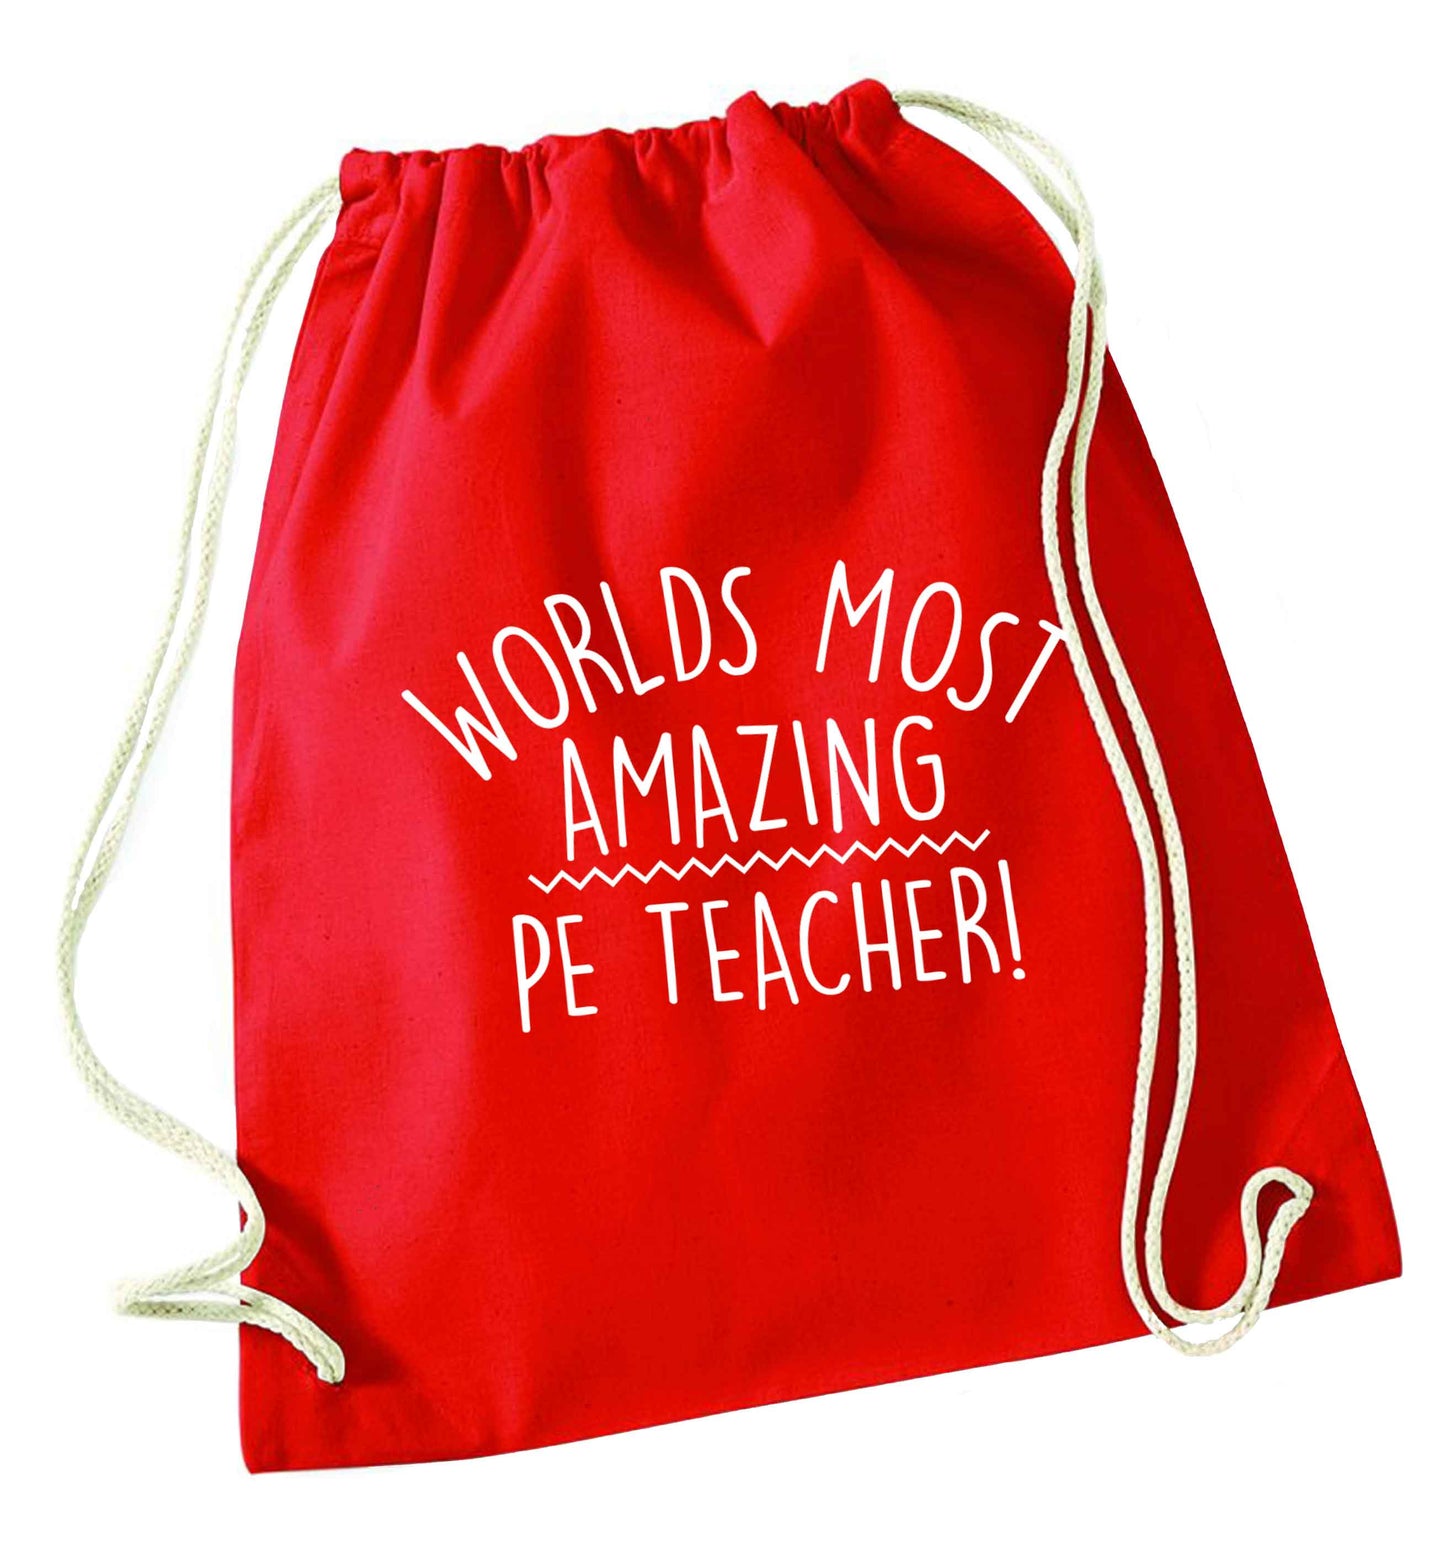 Worlds most amazing PE teacher red drawstring bag 